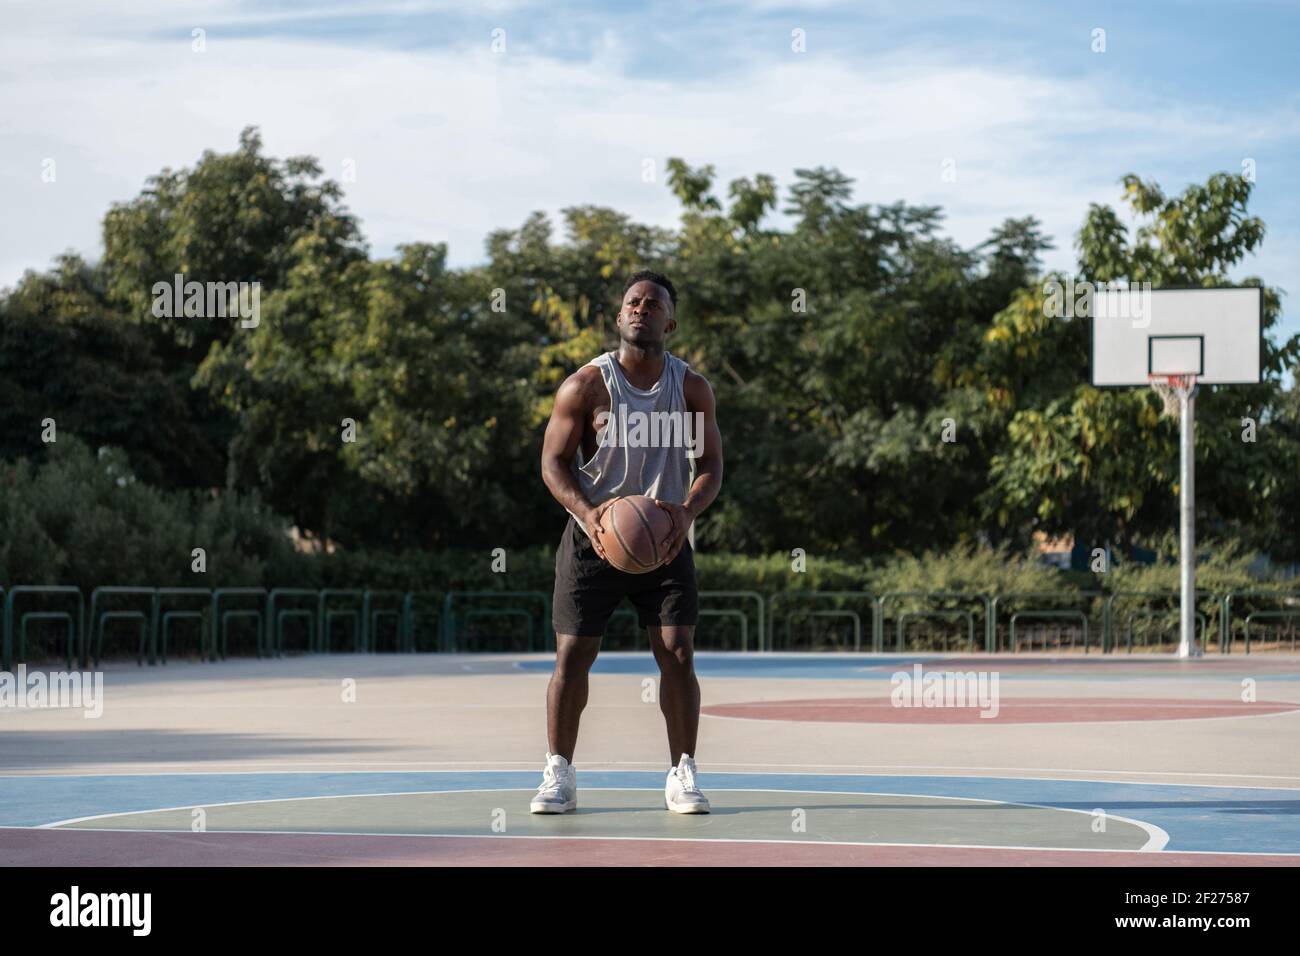 Serious black basketball player ready to perform throw Stock Photo